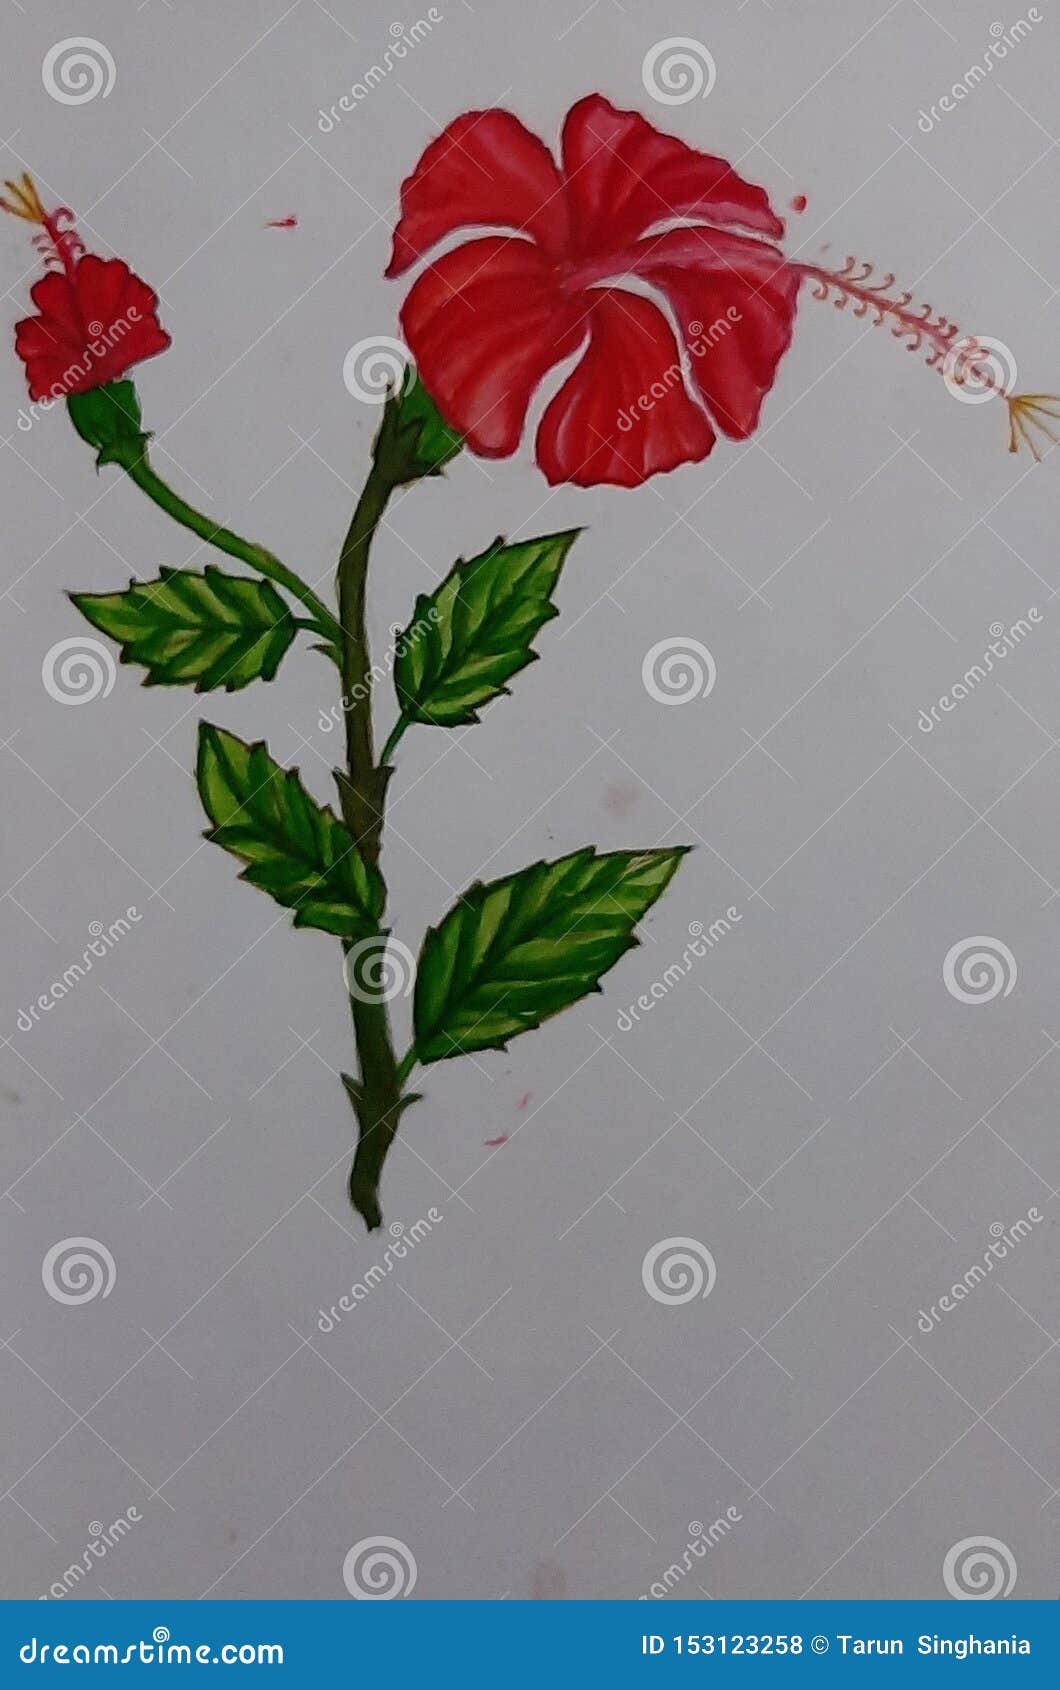 China rose painting stock photo. Image of flower, rose - 153123258